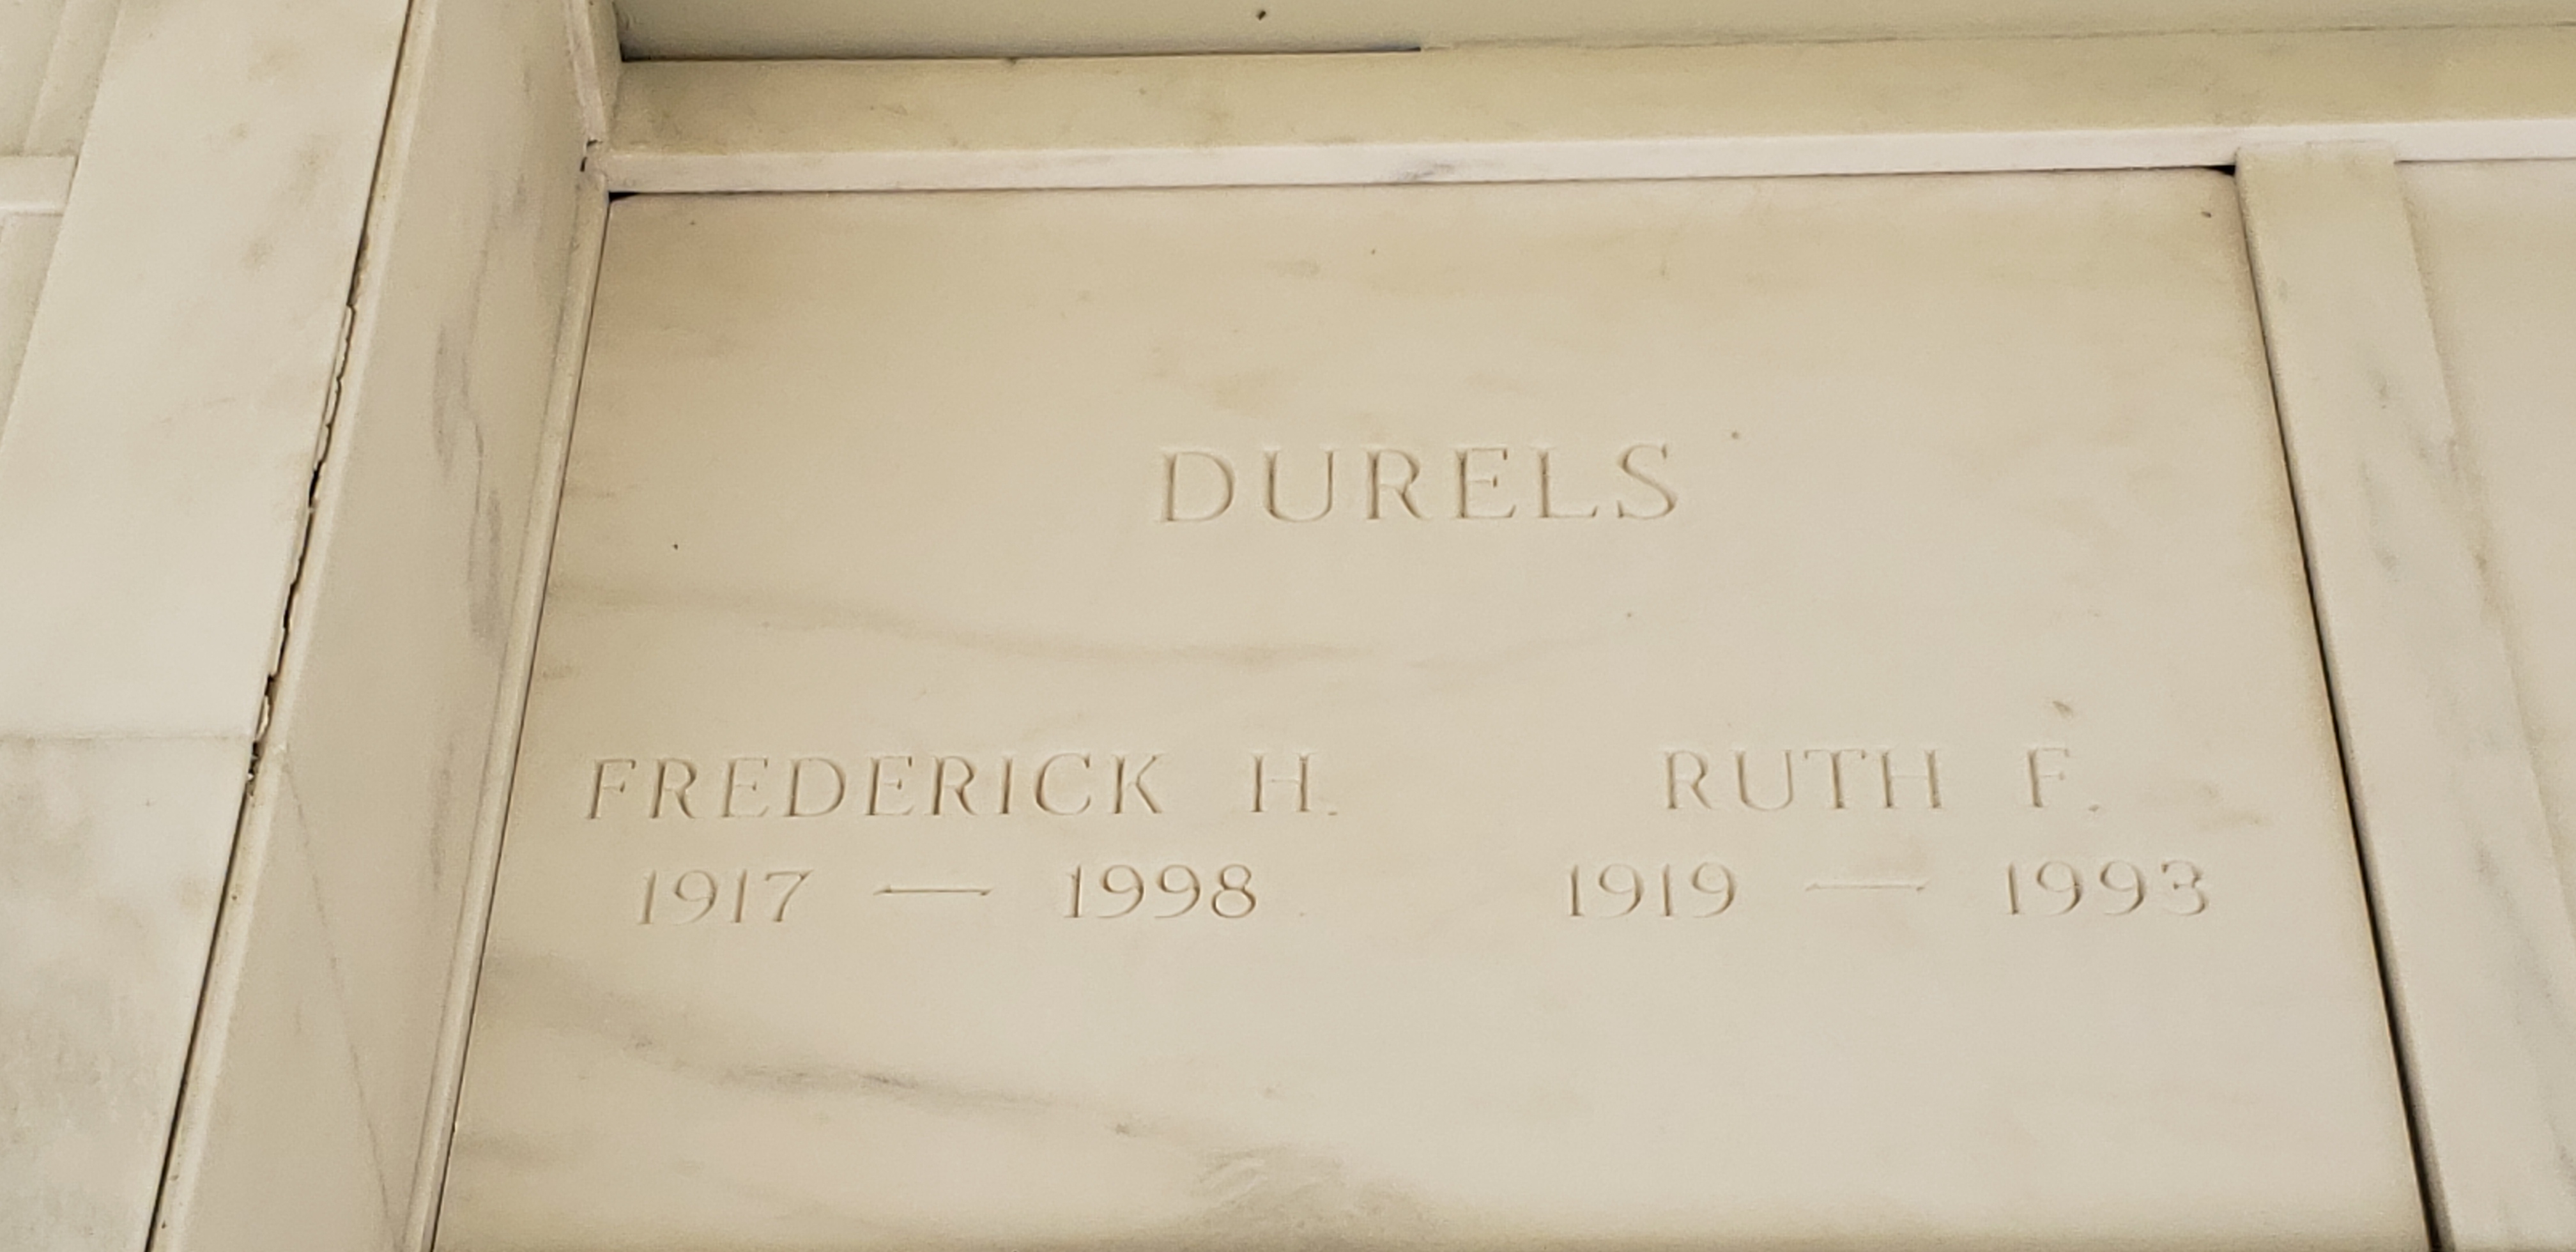 Frederick H Durels